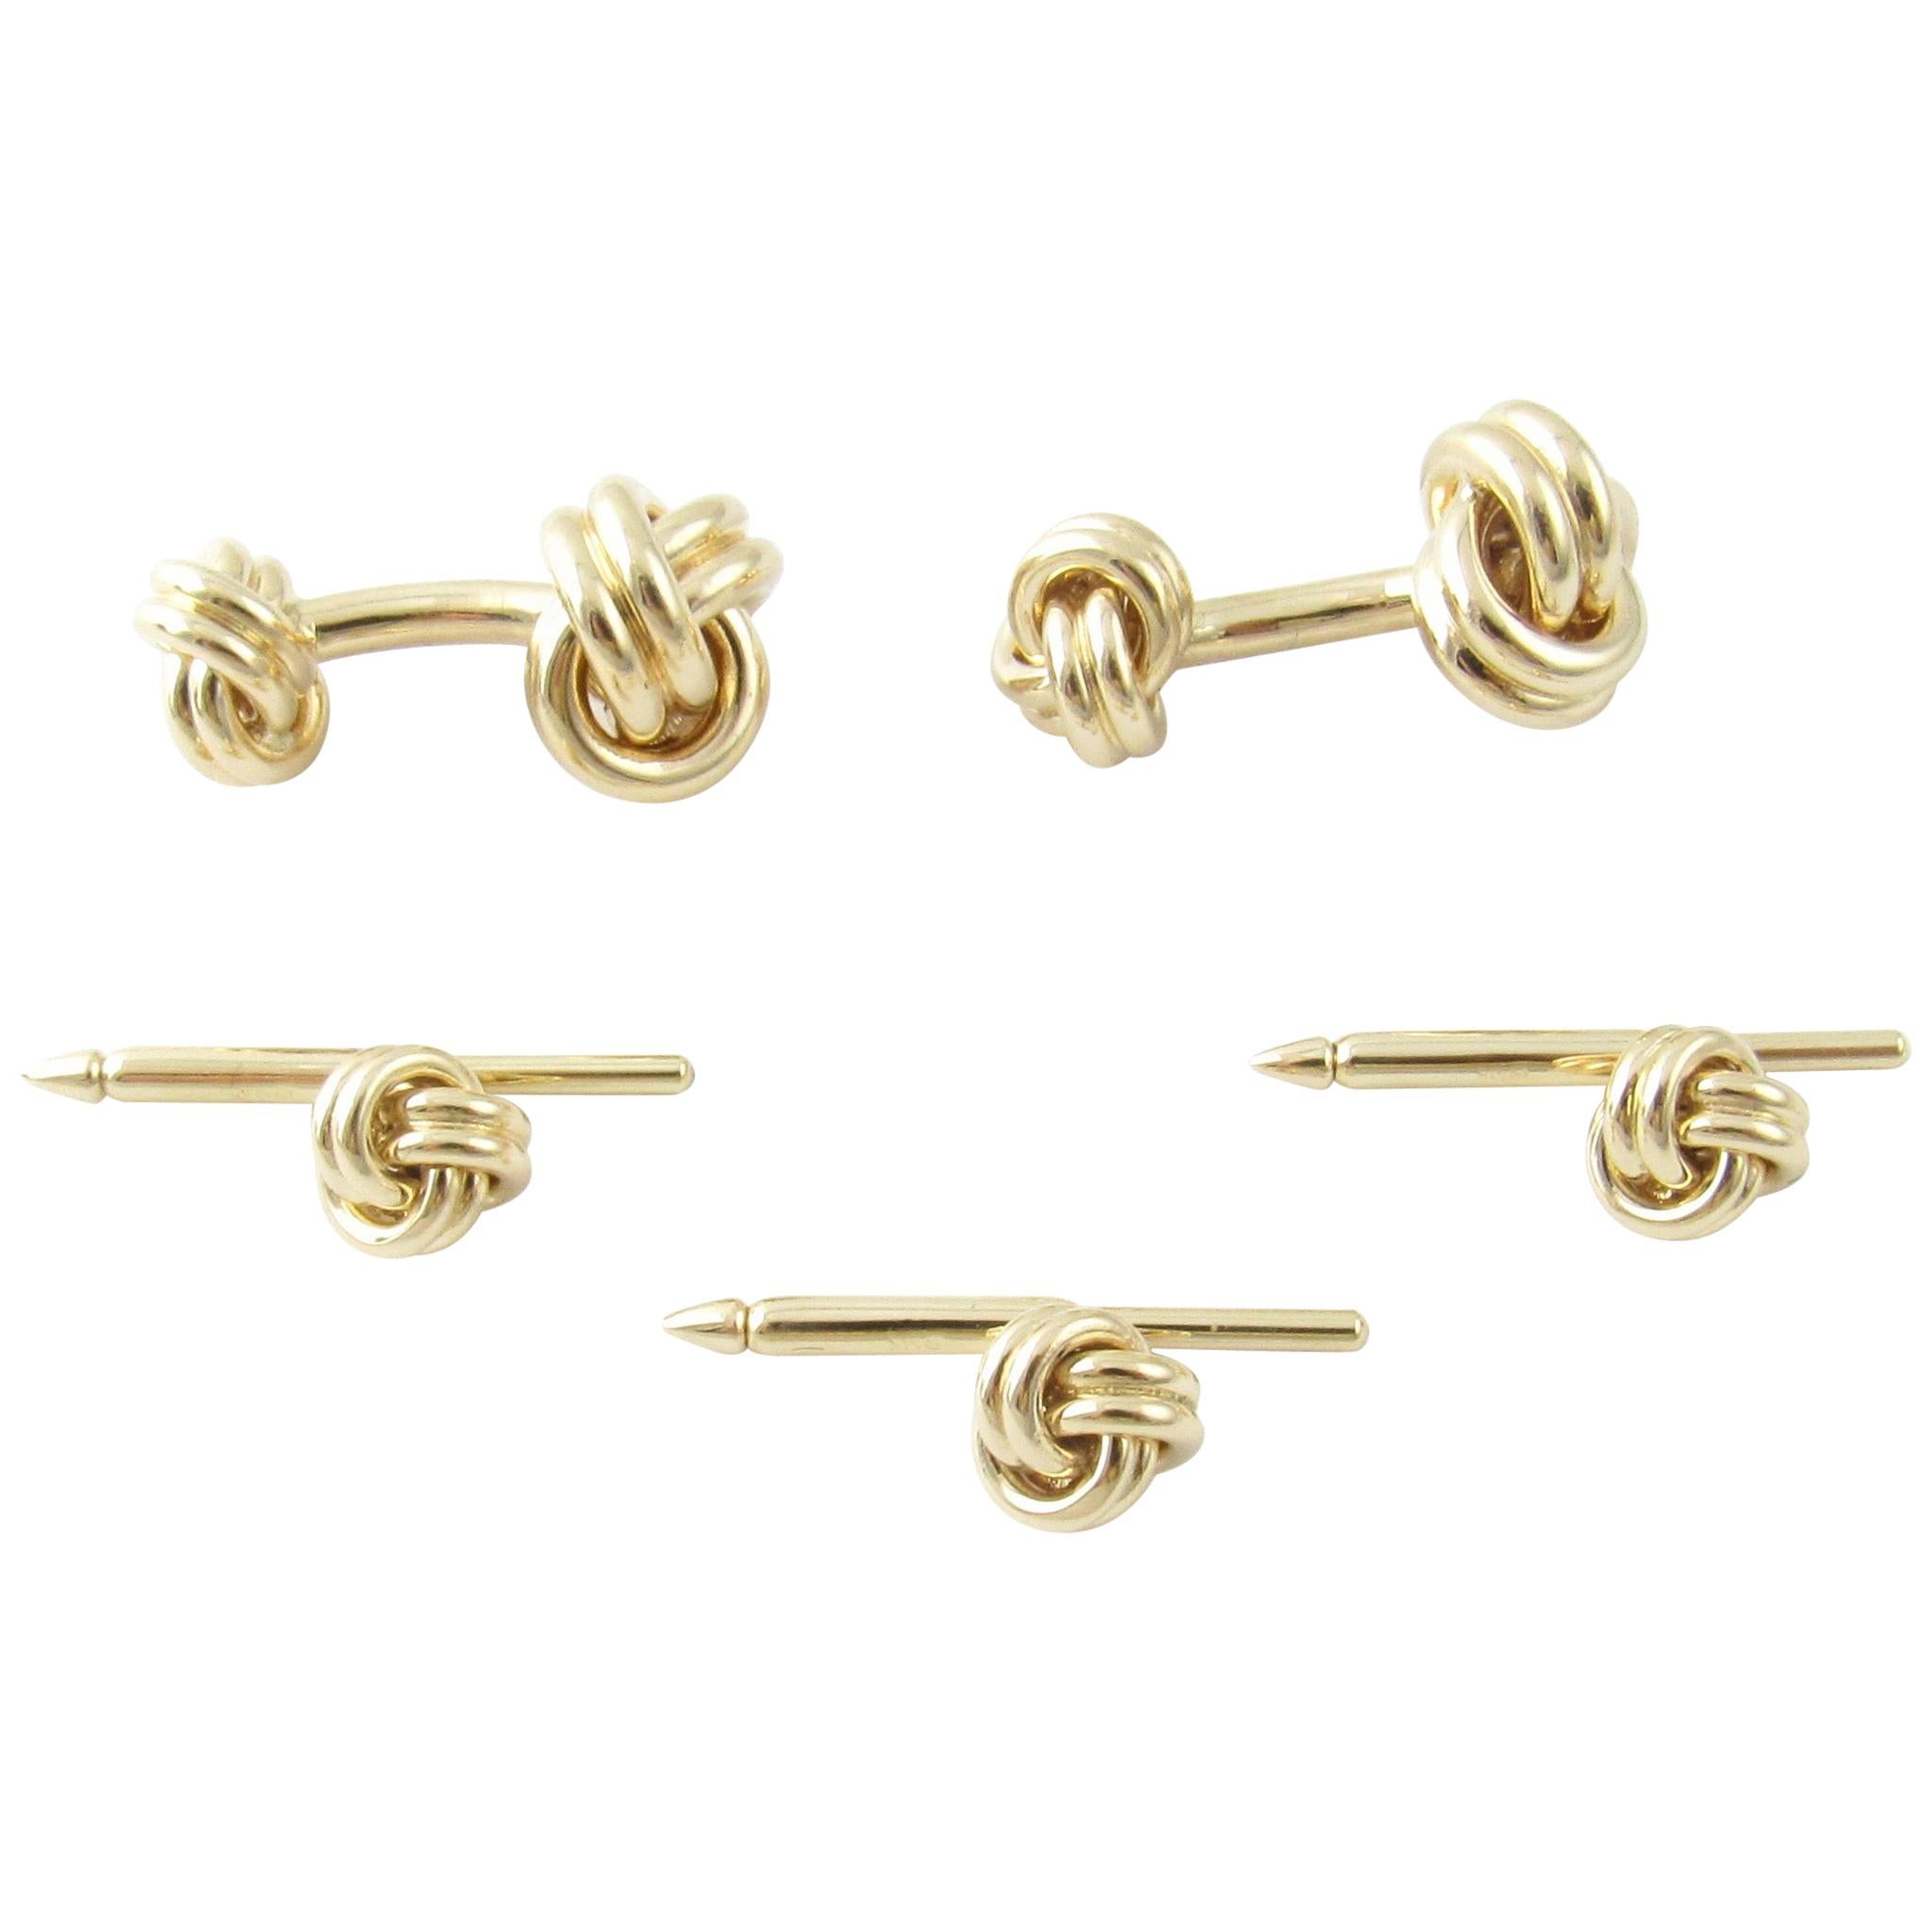 Tiffany & Co. 14 Karat Gold Love Knot Cufflinks and 3 Shirt Studs with Box